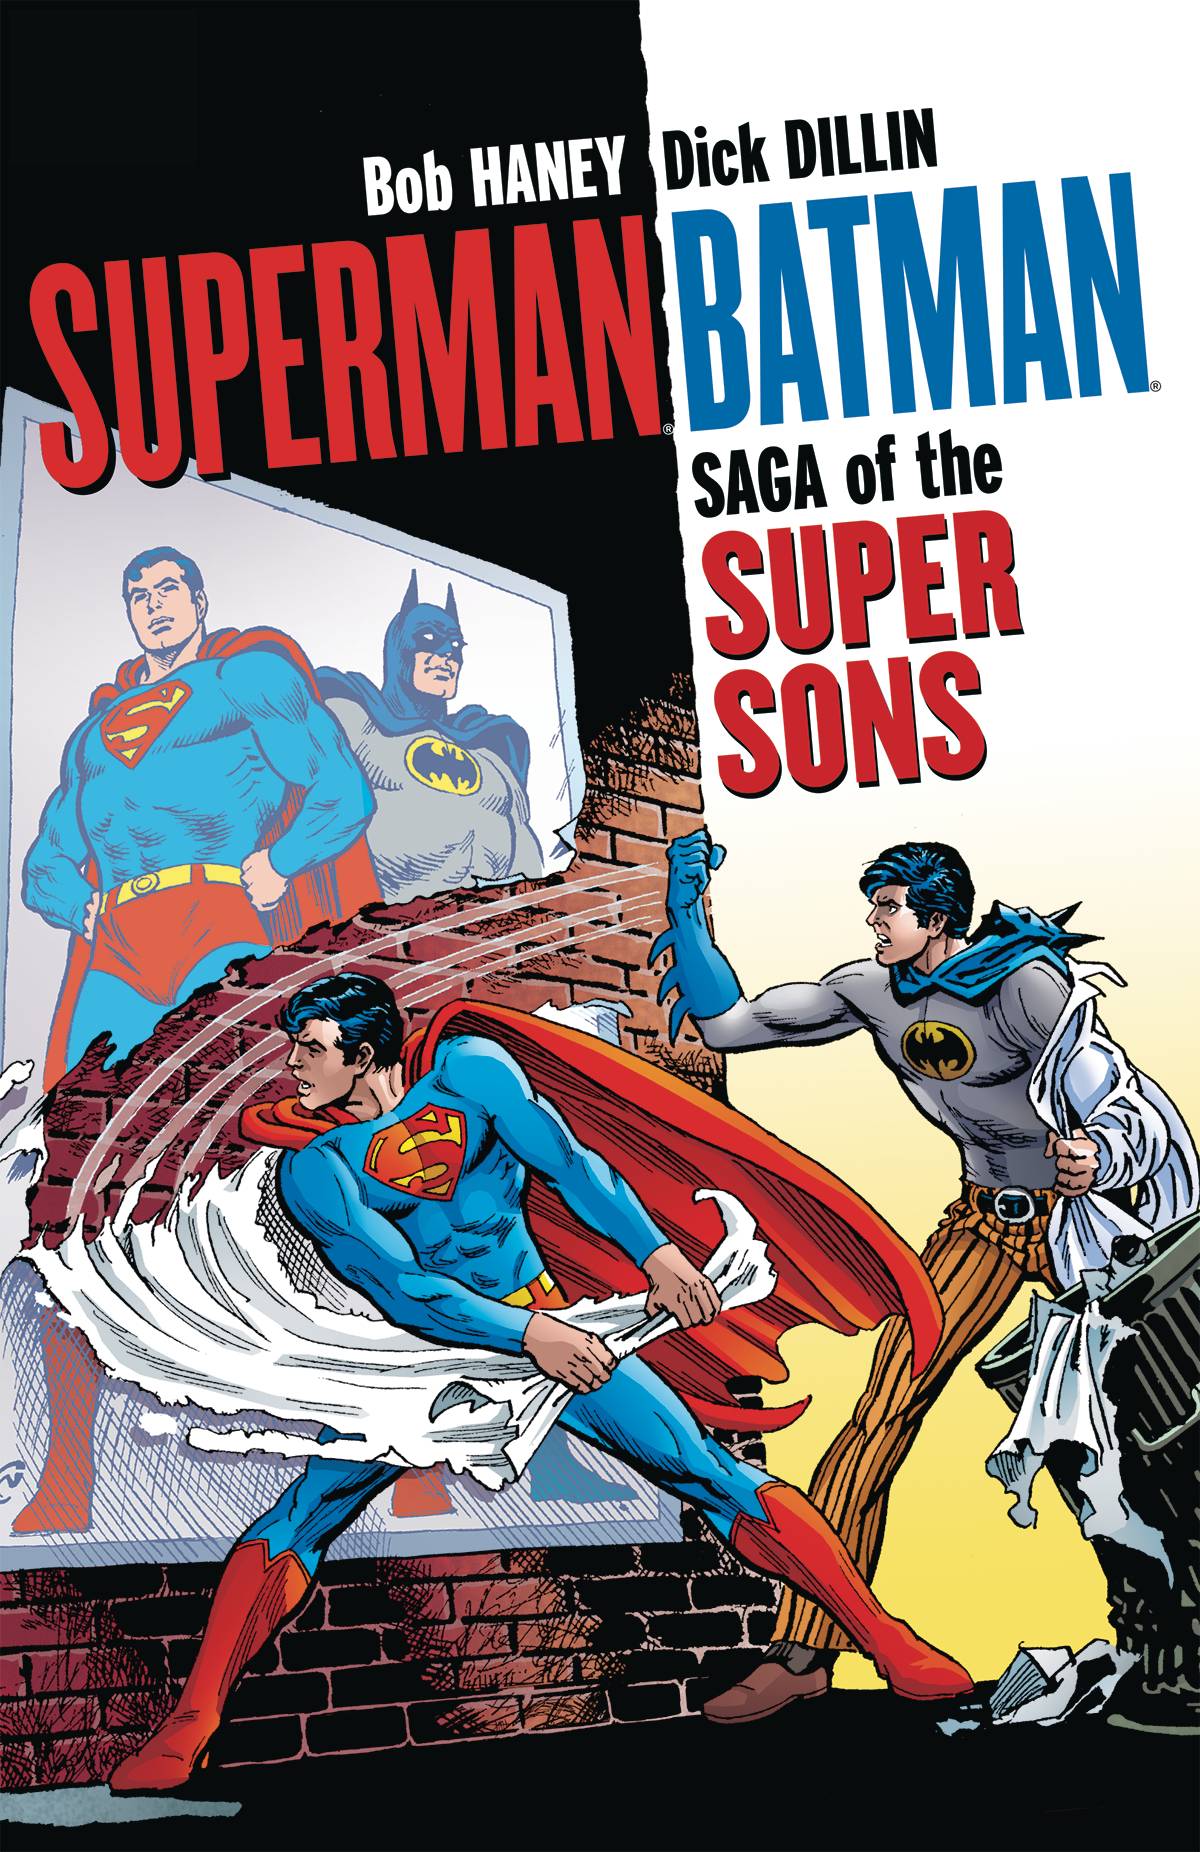 Superman Batman Saga of the Super Sons Graphic Novel New Edition